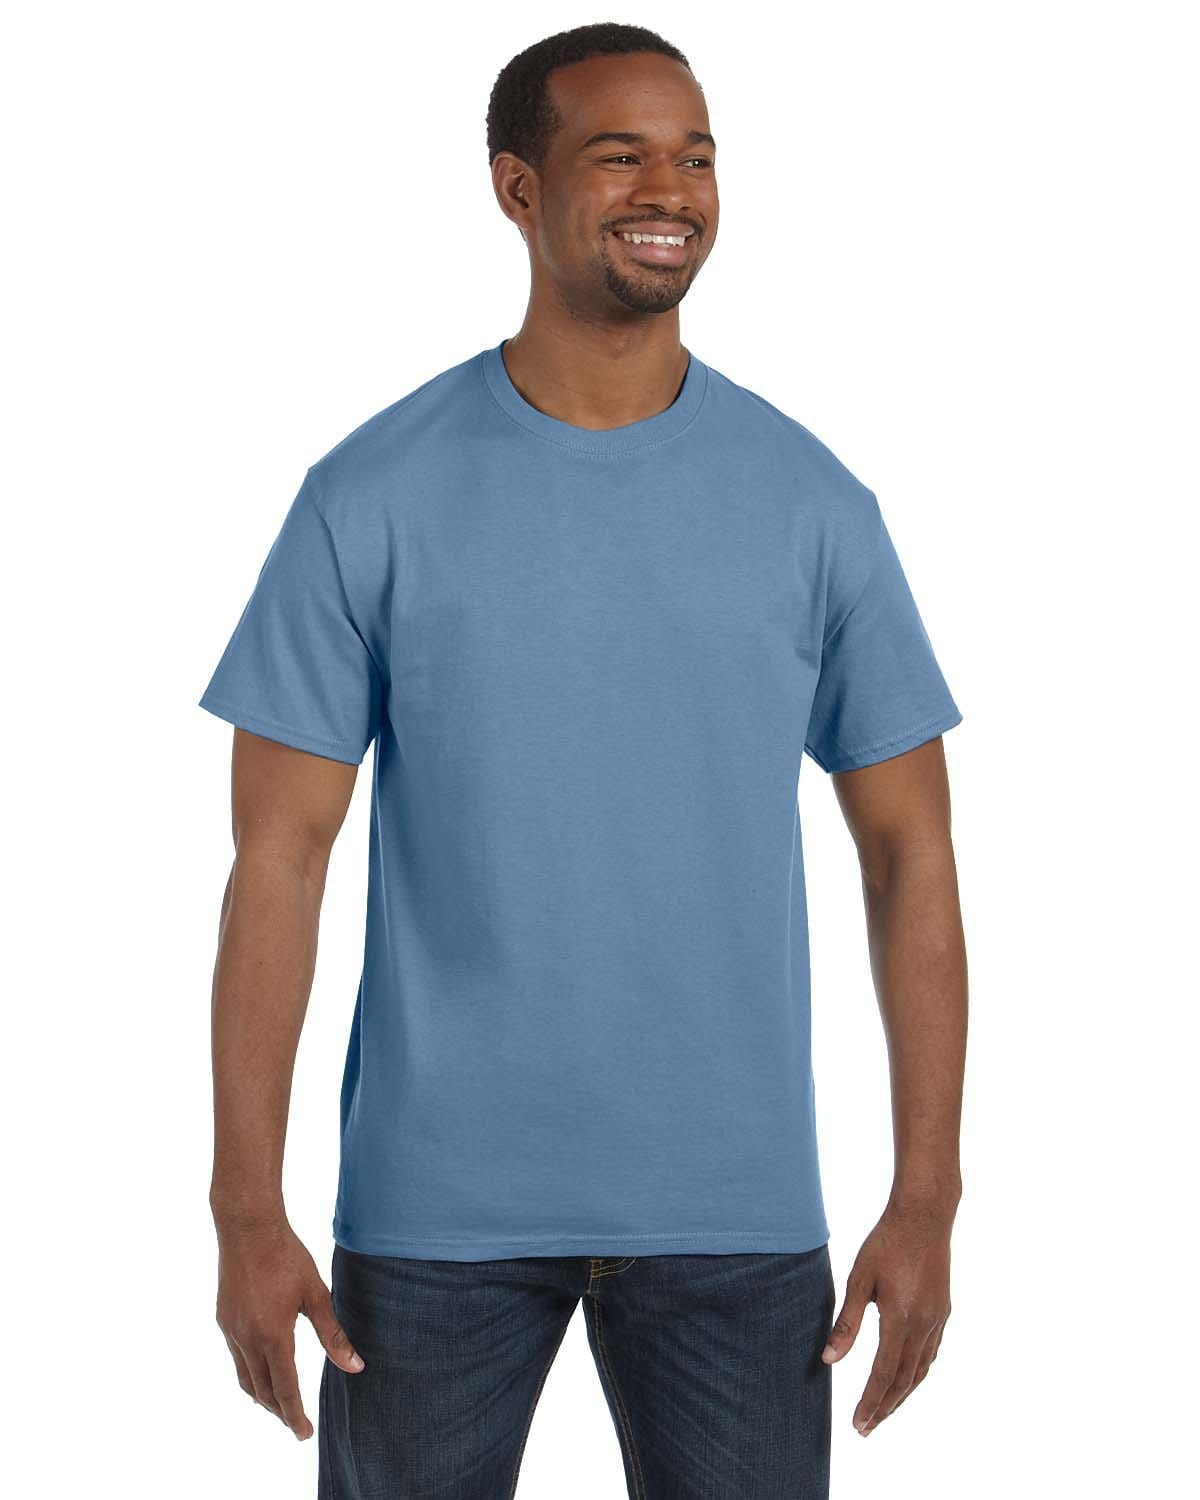  Hanes Authentic T-Shirt - Screen - Colors 6729-S-C